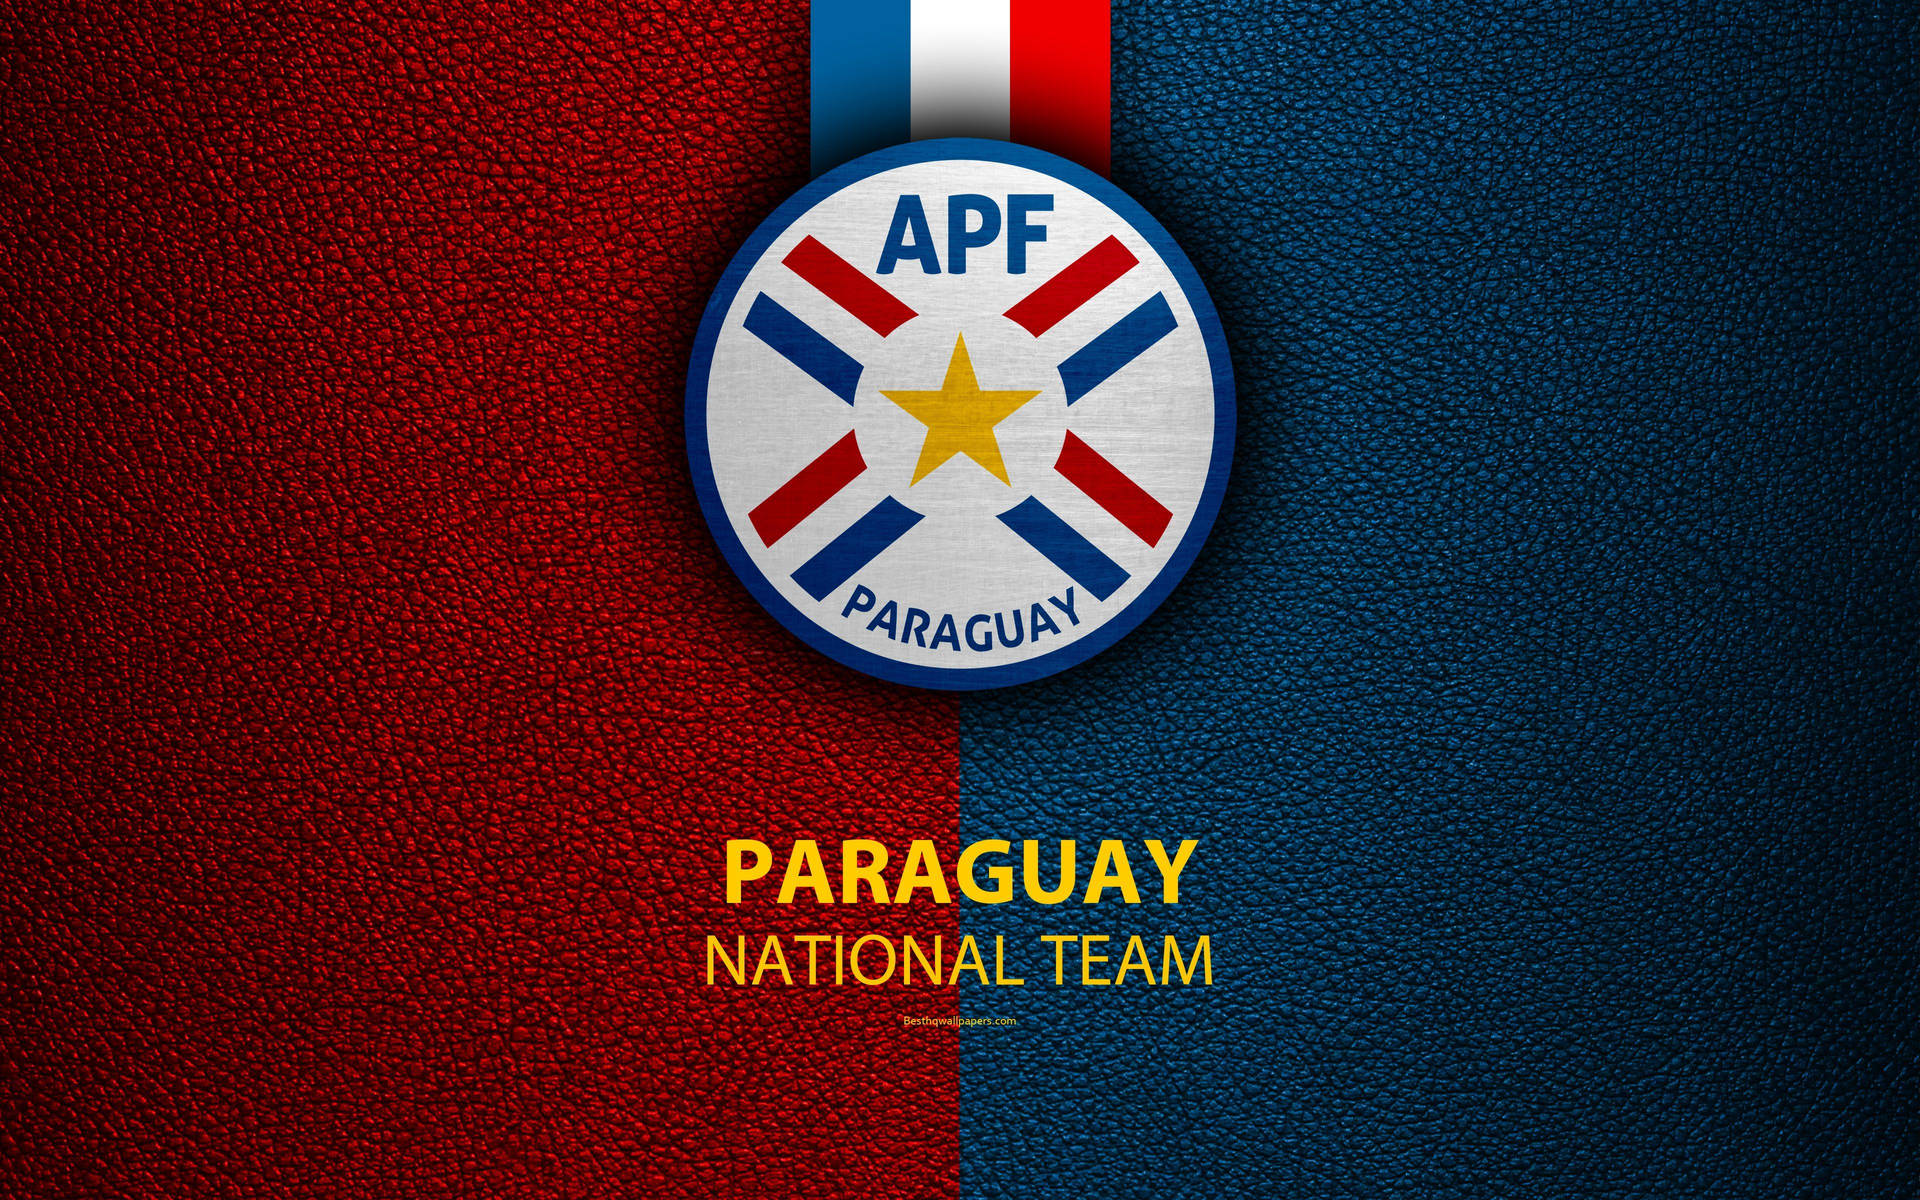 Paraguay National Team Medal Background